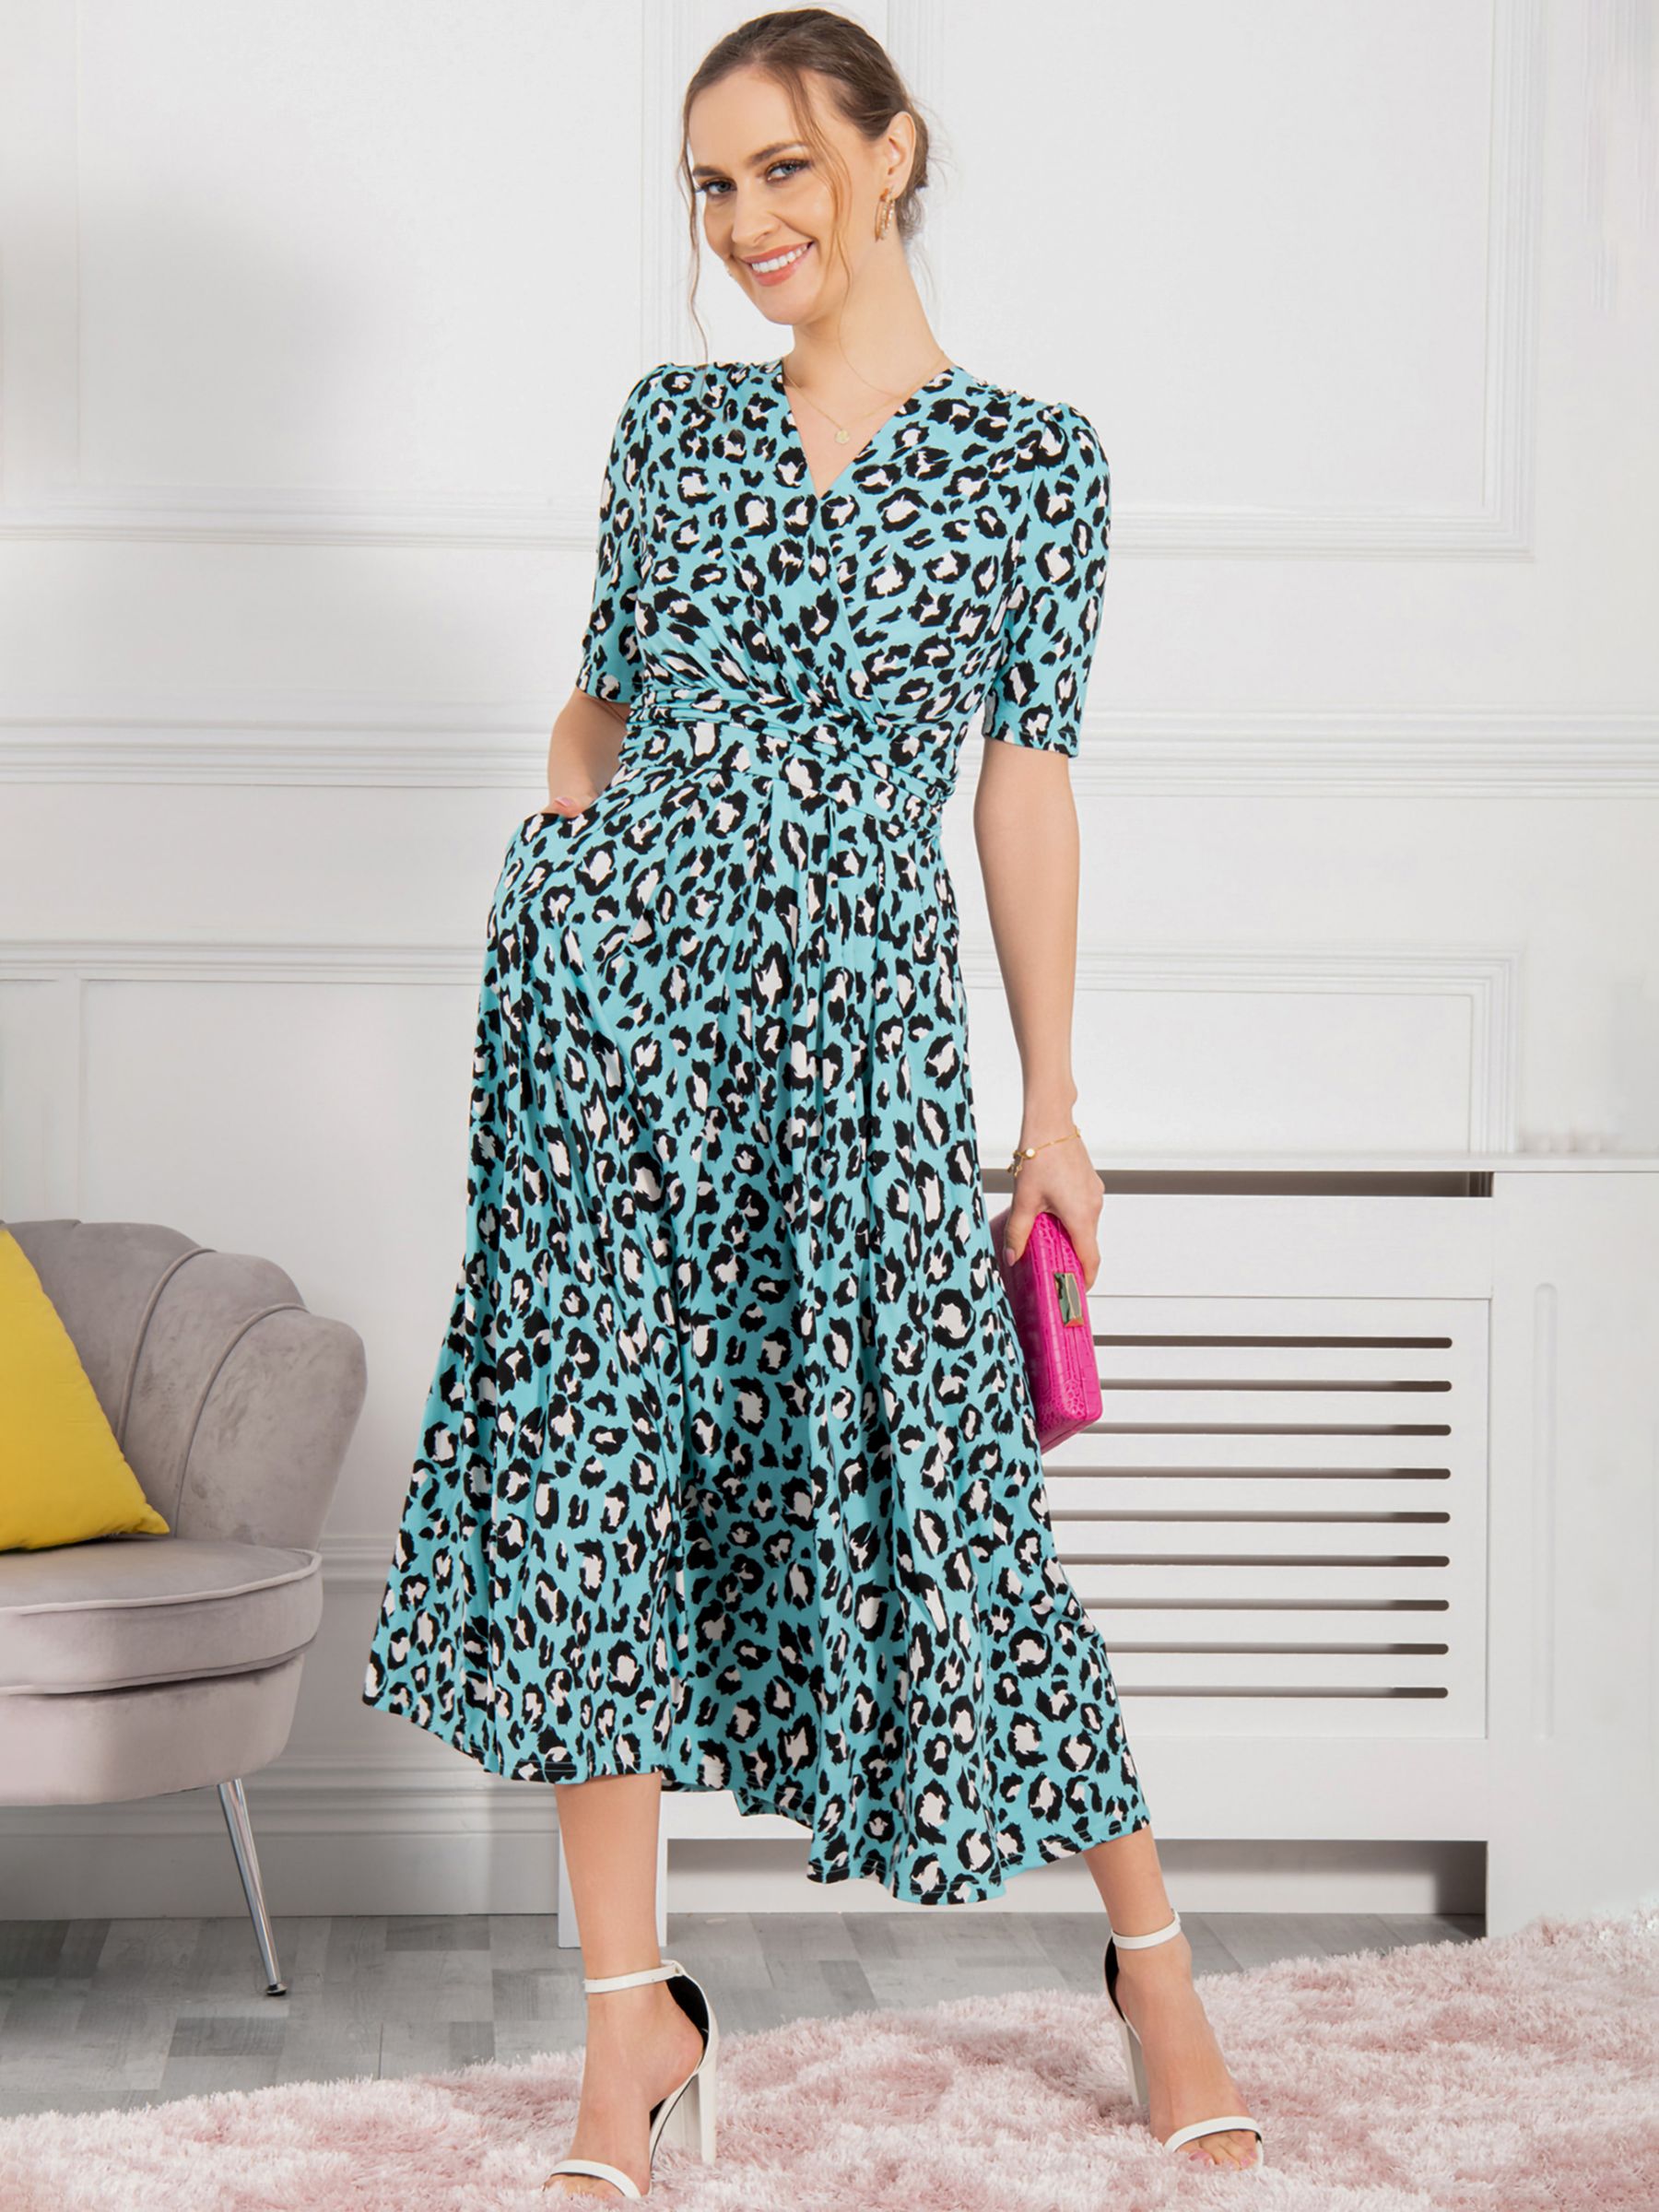 Jolie Moi Josie Leopard Print Maxi Dress, Blue/Multi, 8